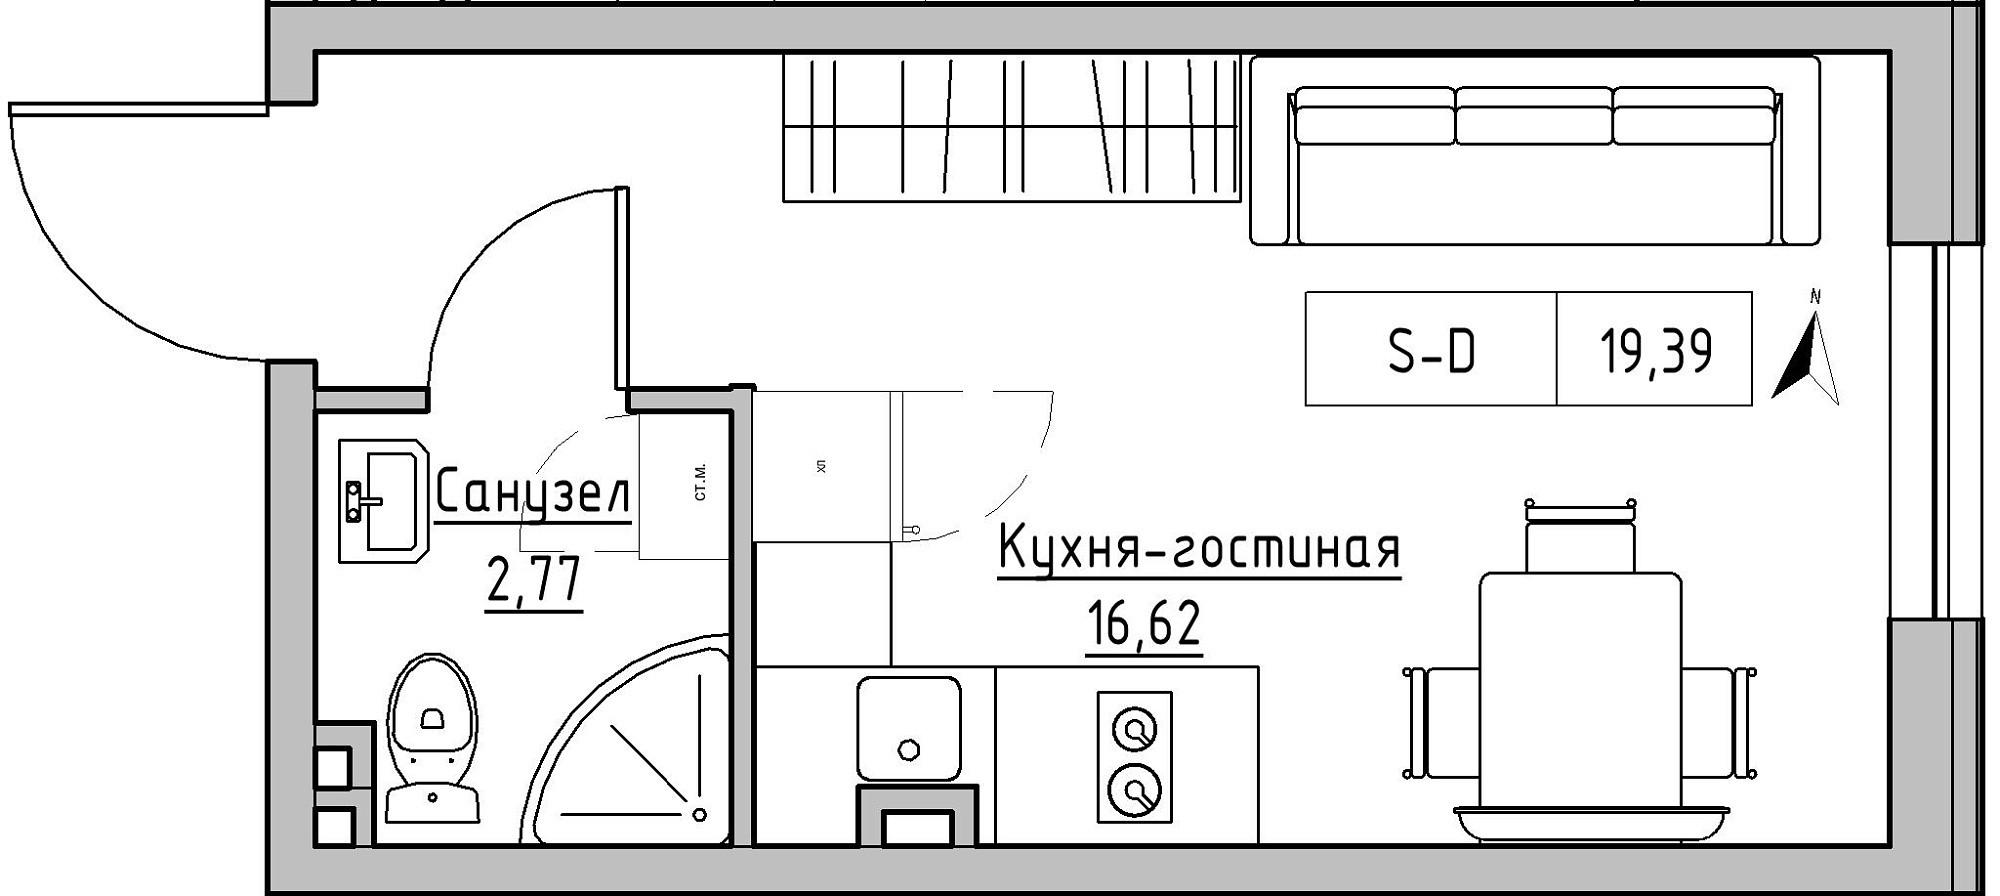 Planning Smart flats area 19.39m2, KS-024-01/0014.